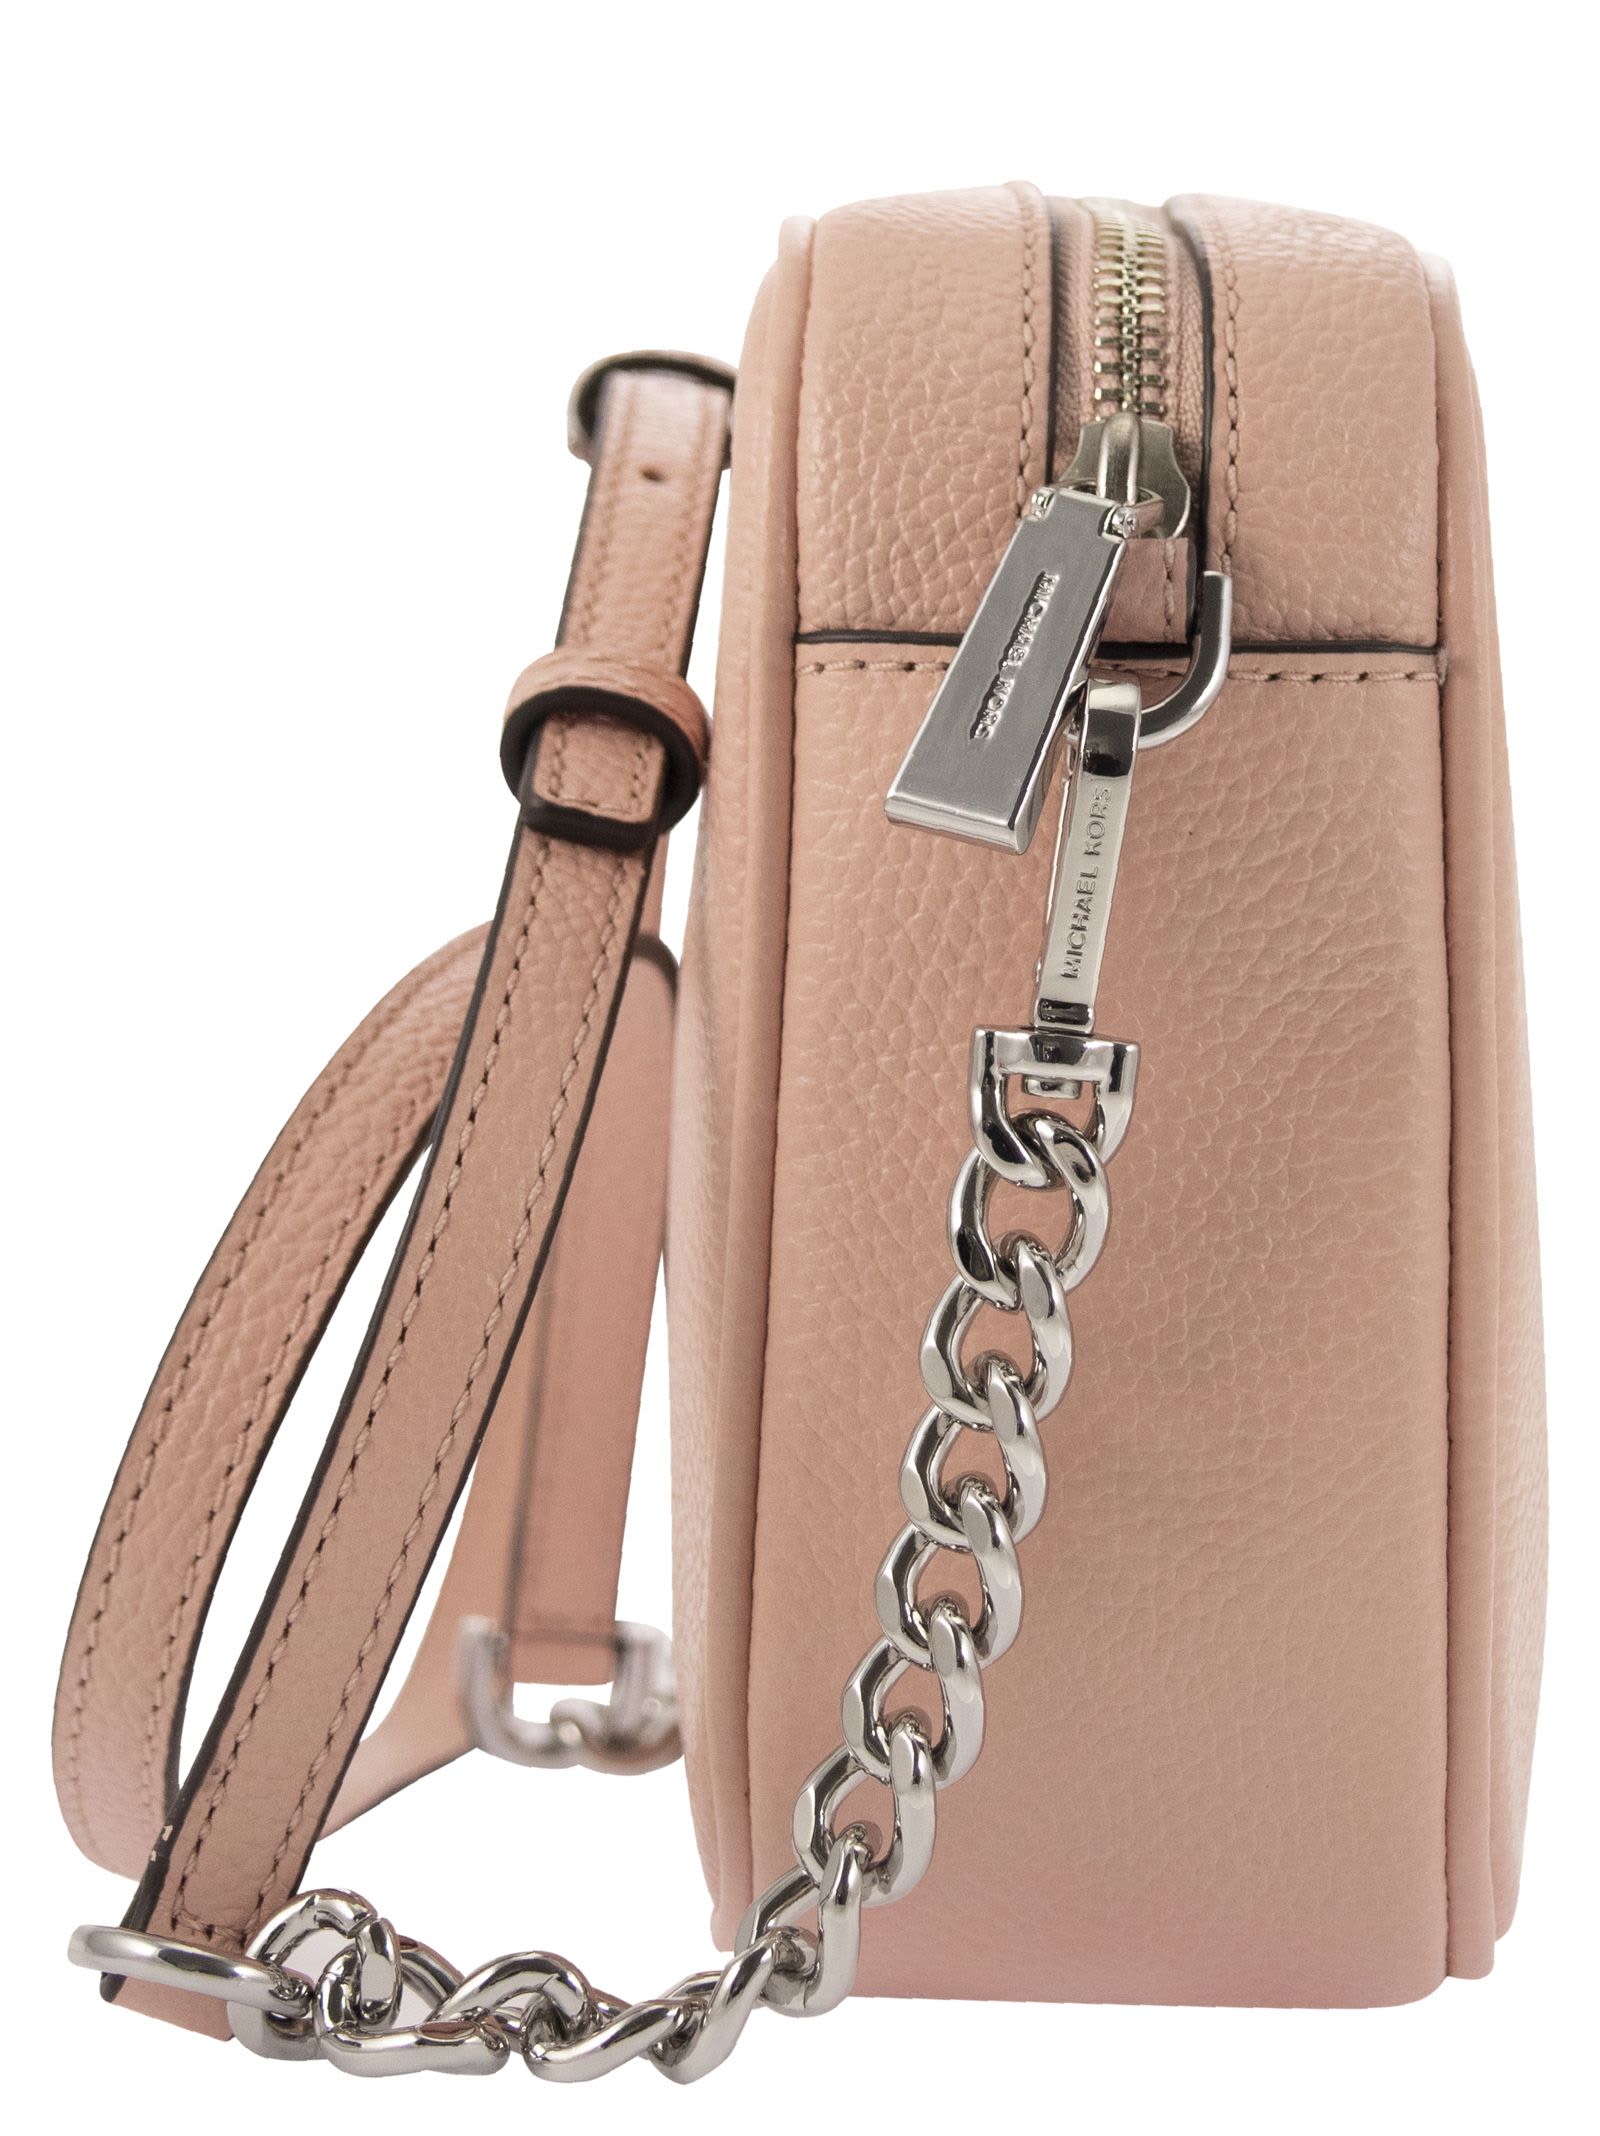 Michael Kors - Ginny Leather Crossbody Bag Ultra Pink